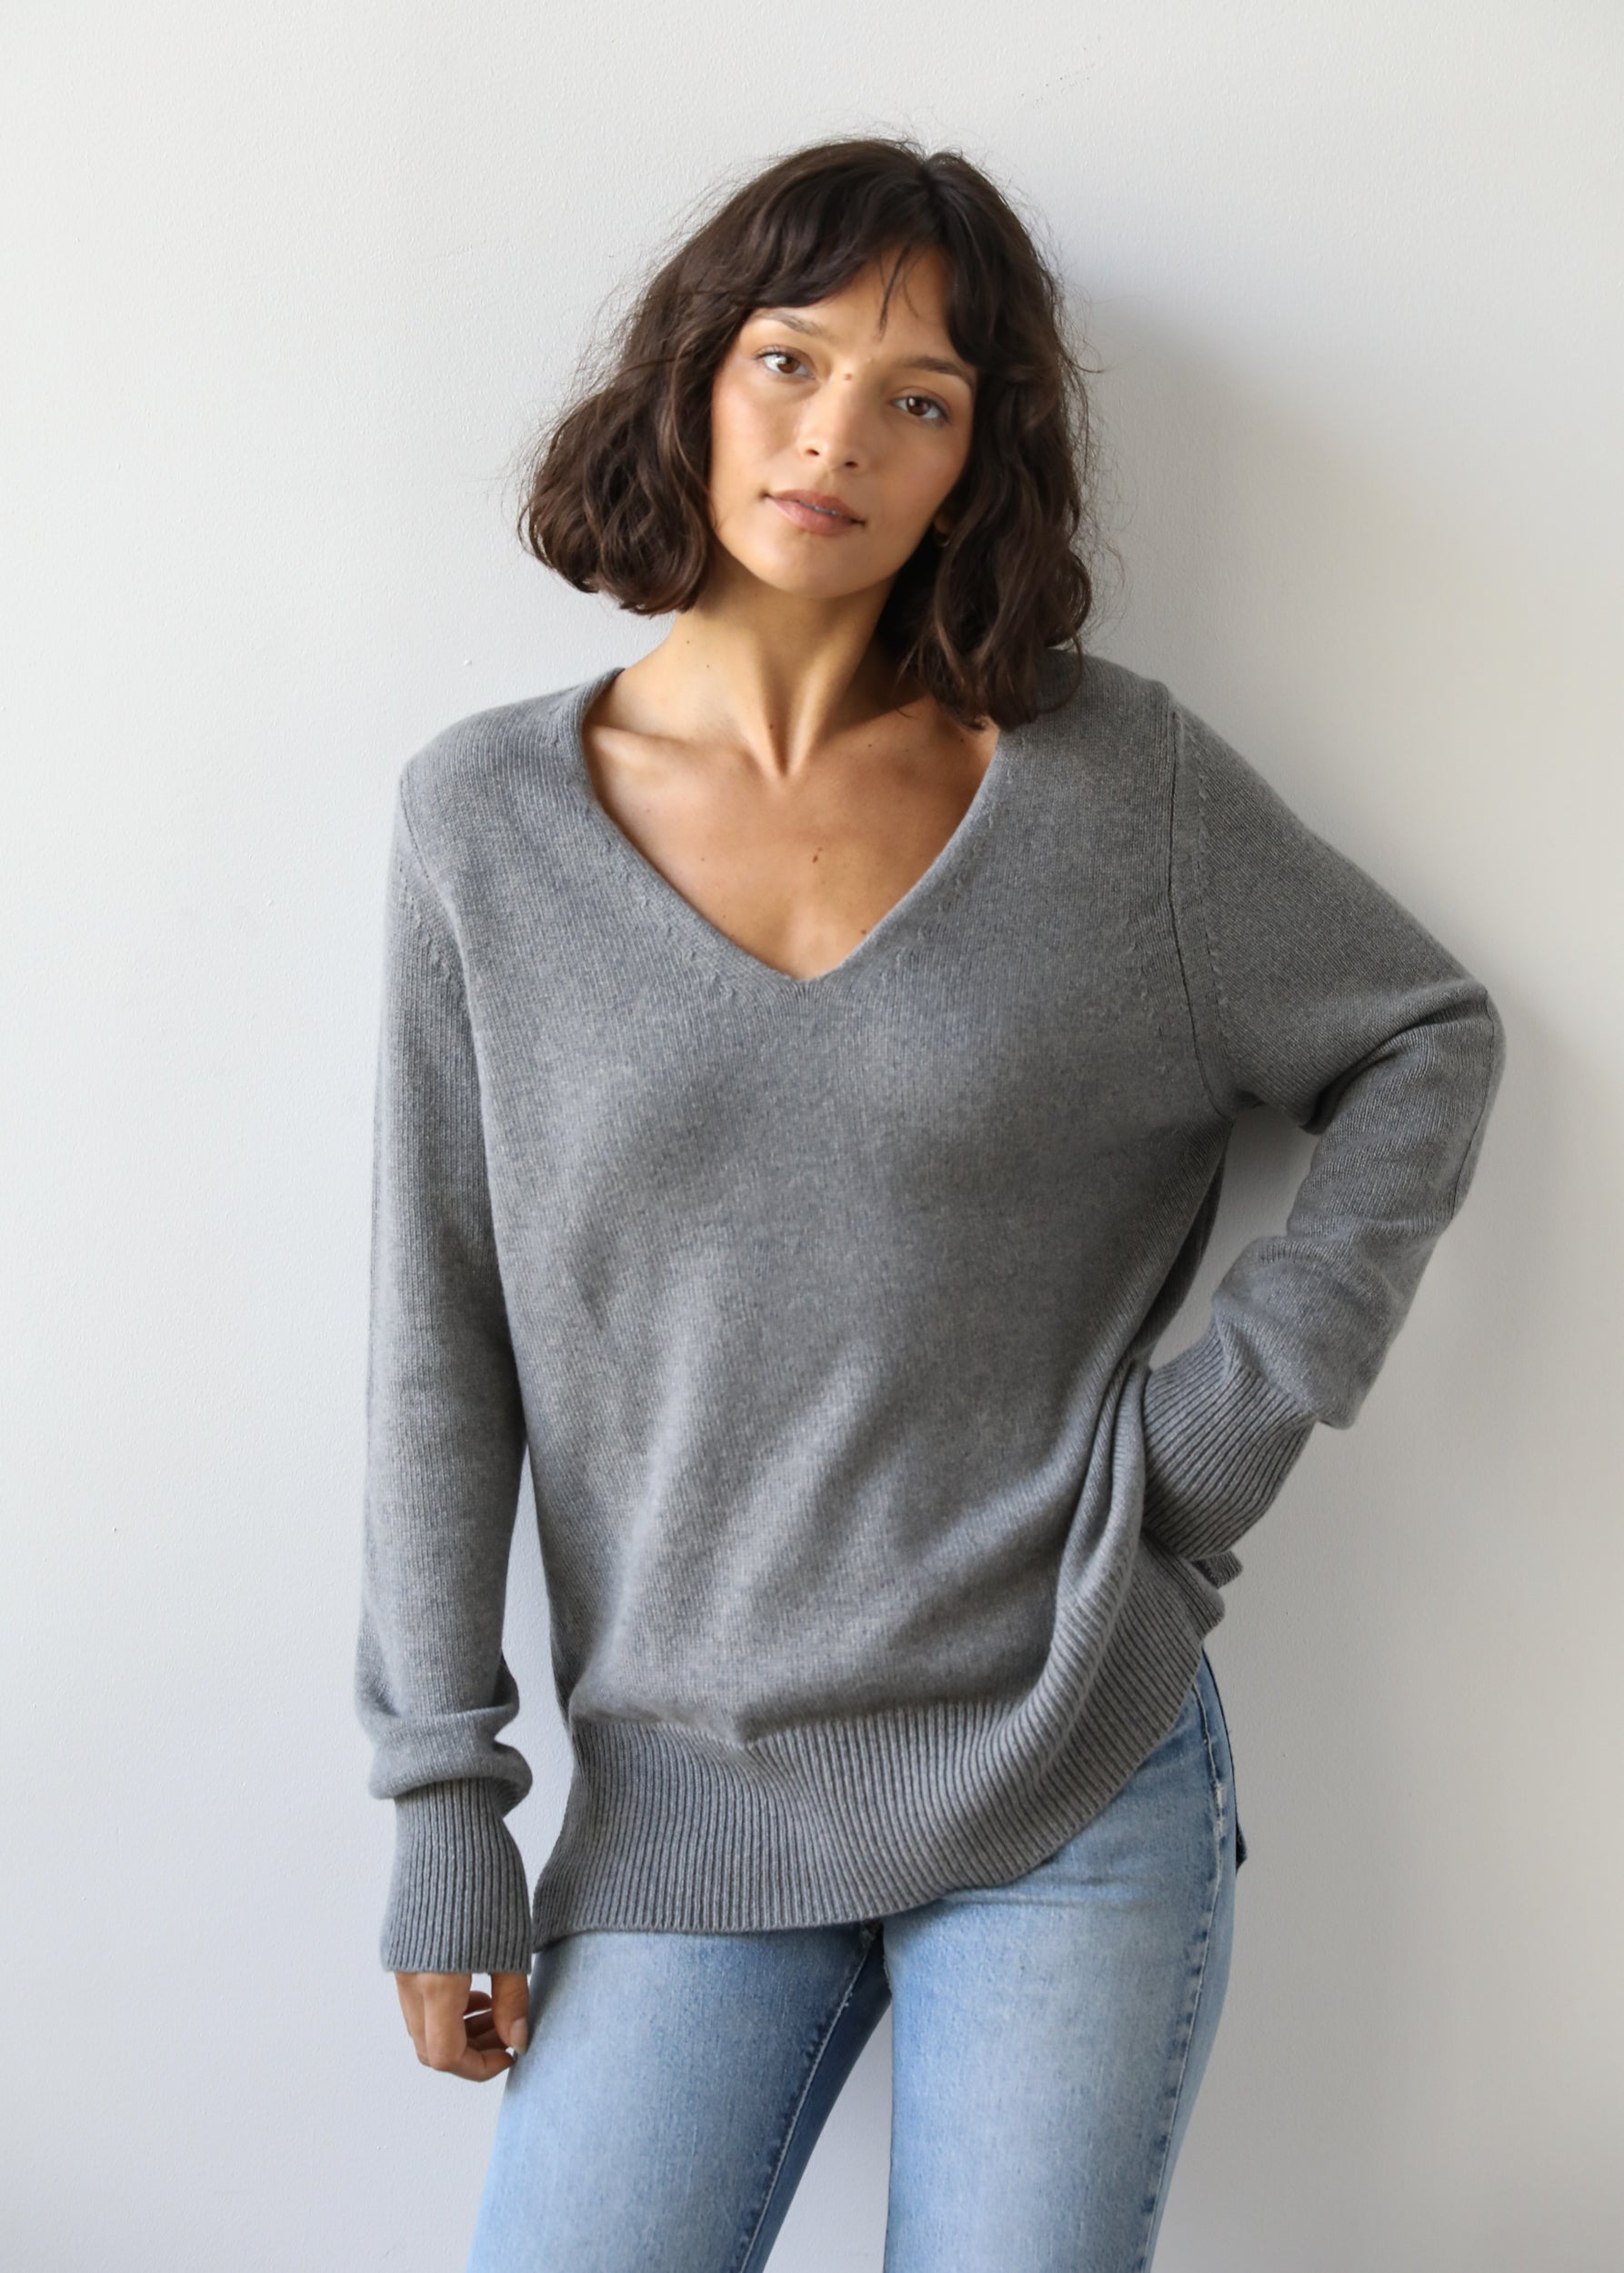 Estella NYC Valentina Sweater in Grey Cashmere